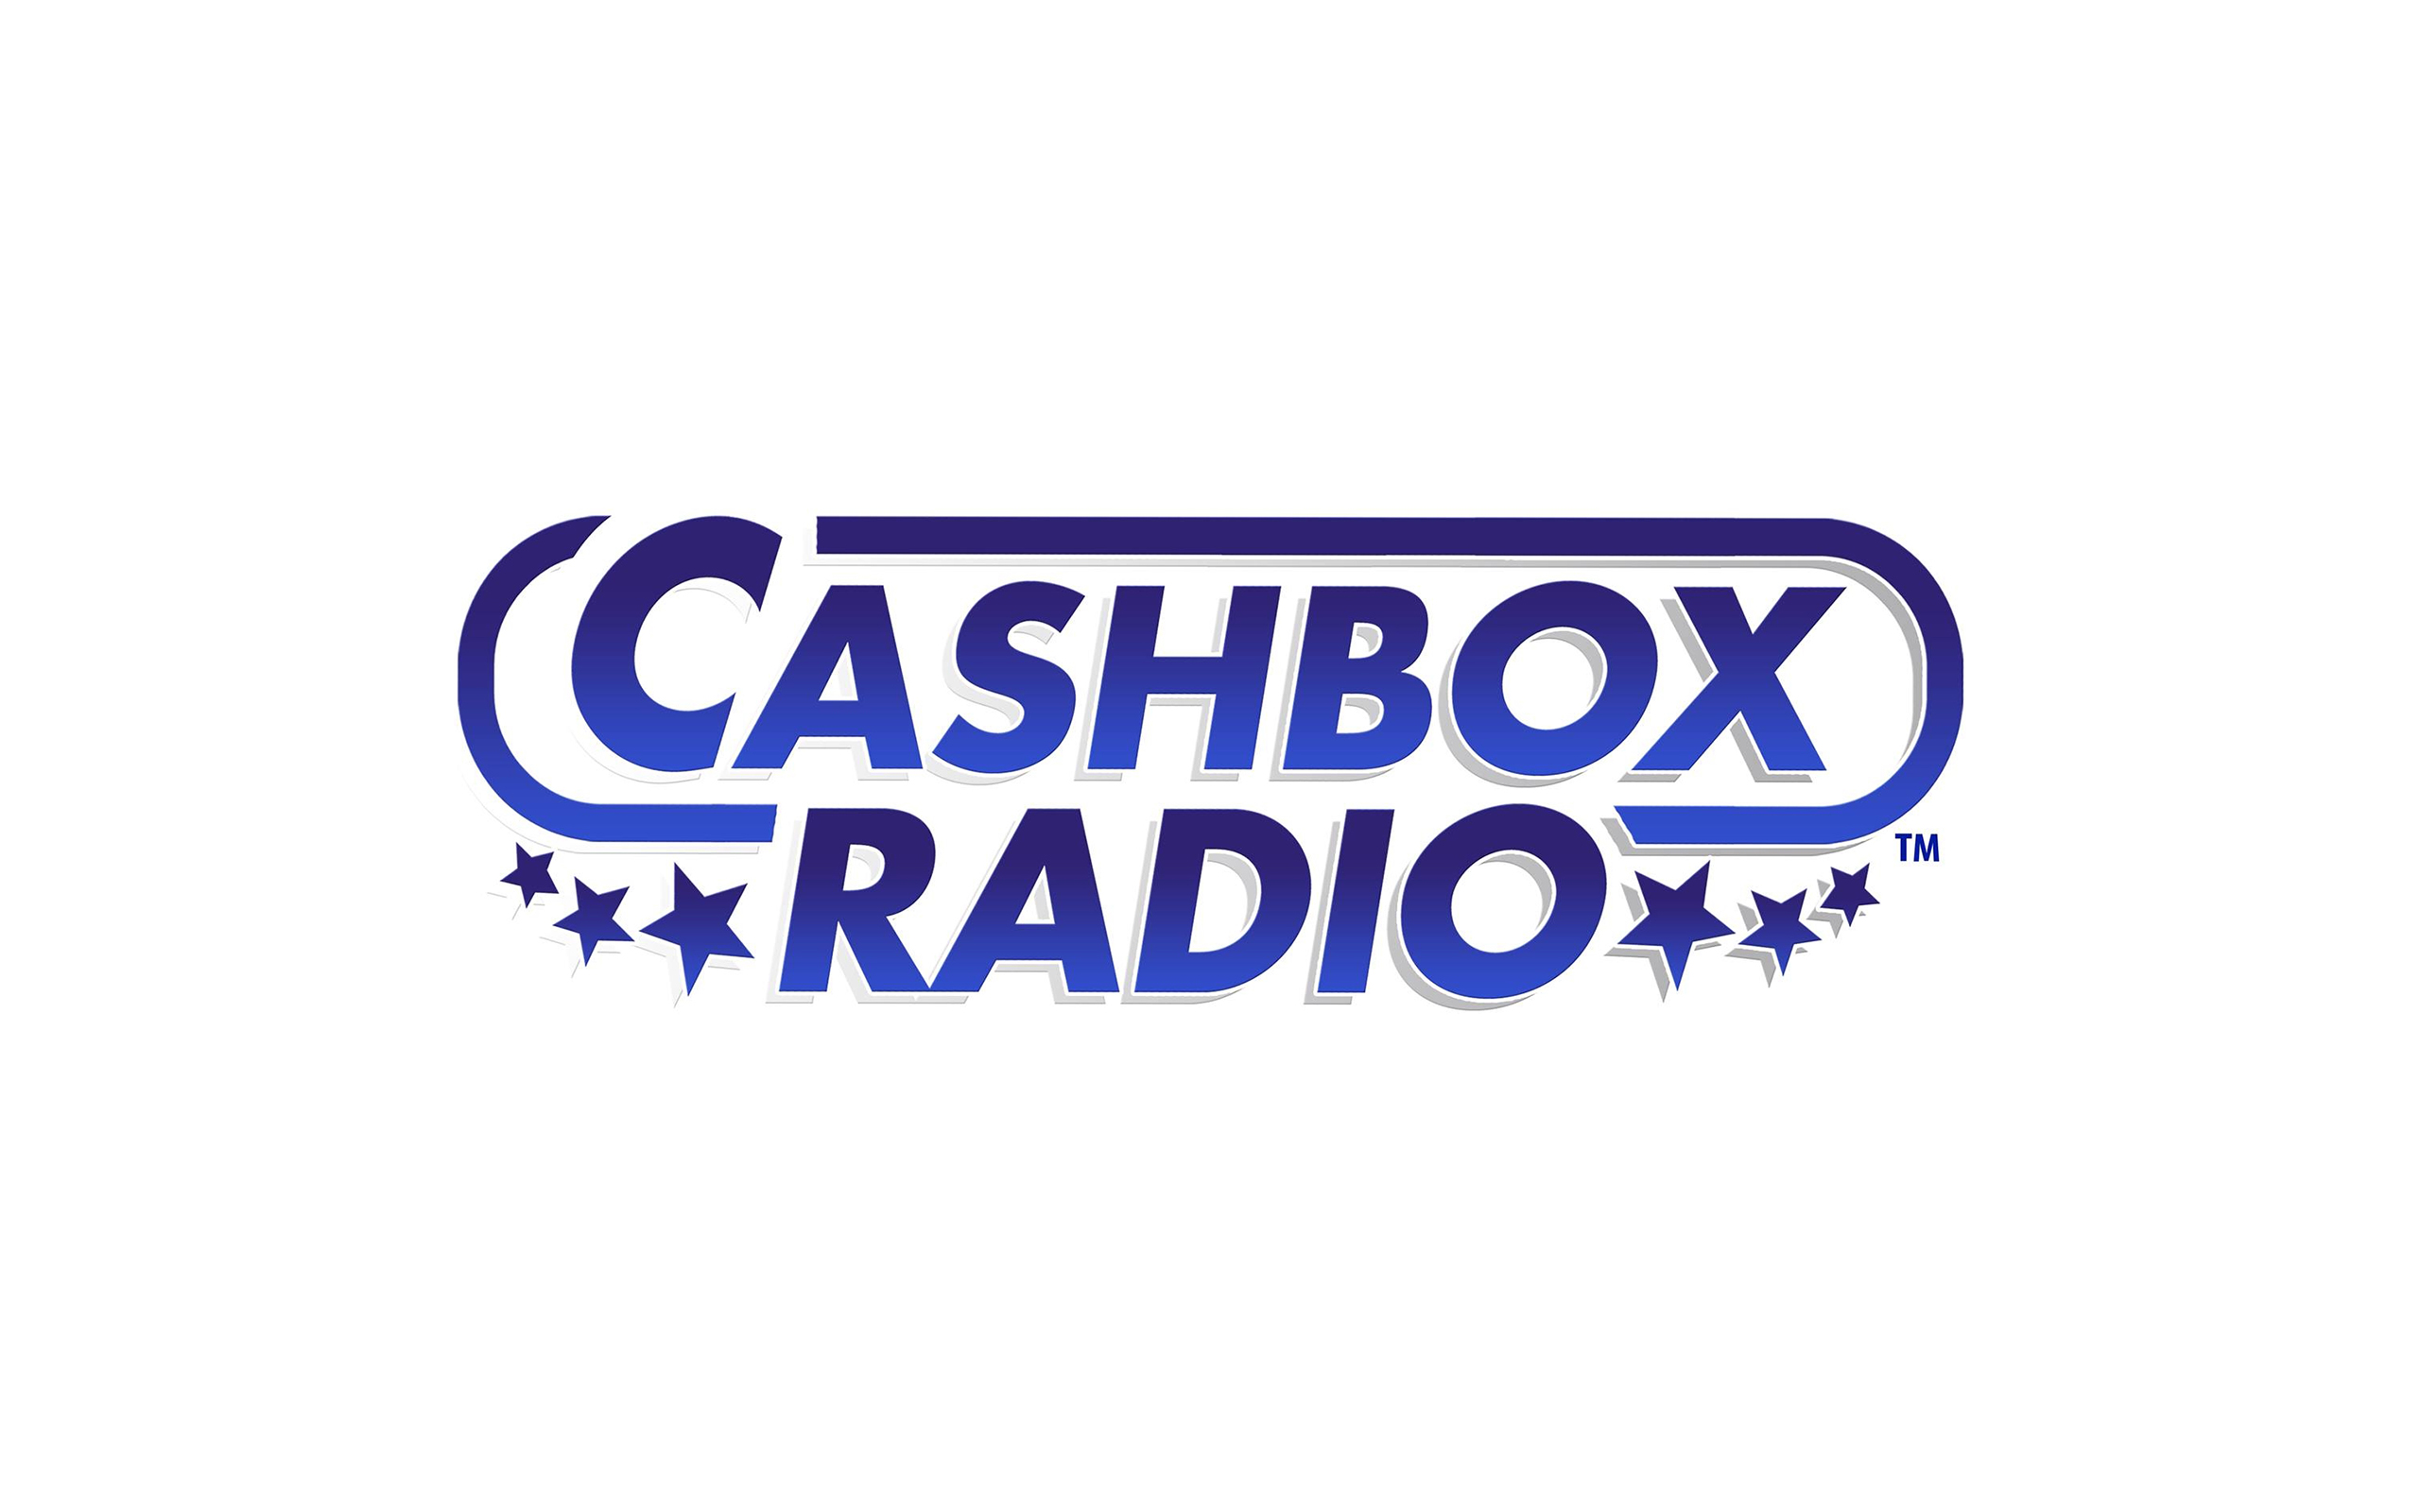 Cashbox Radio features Deliverance